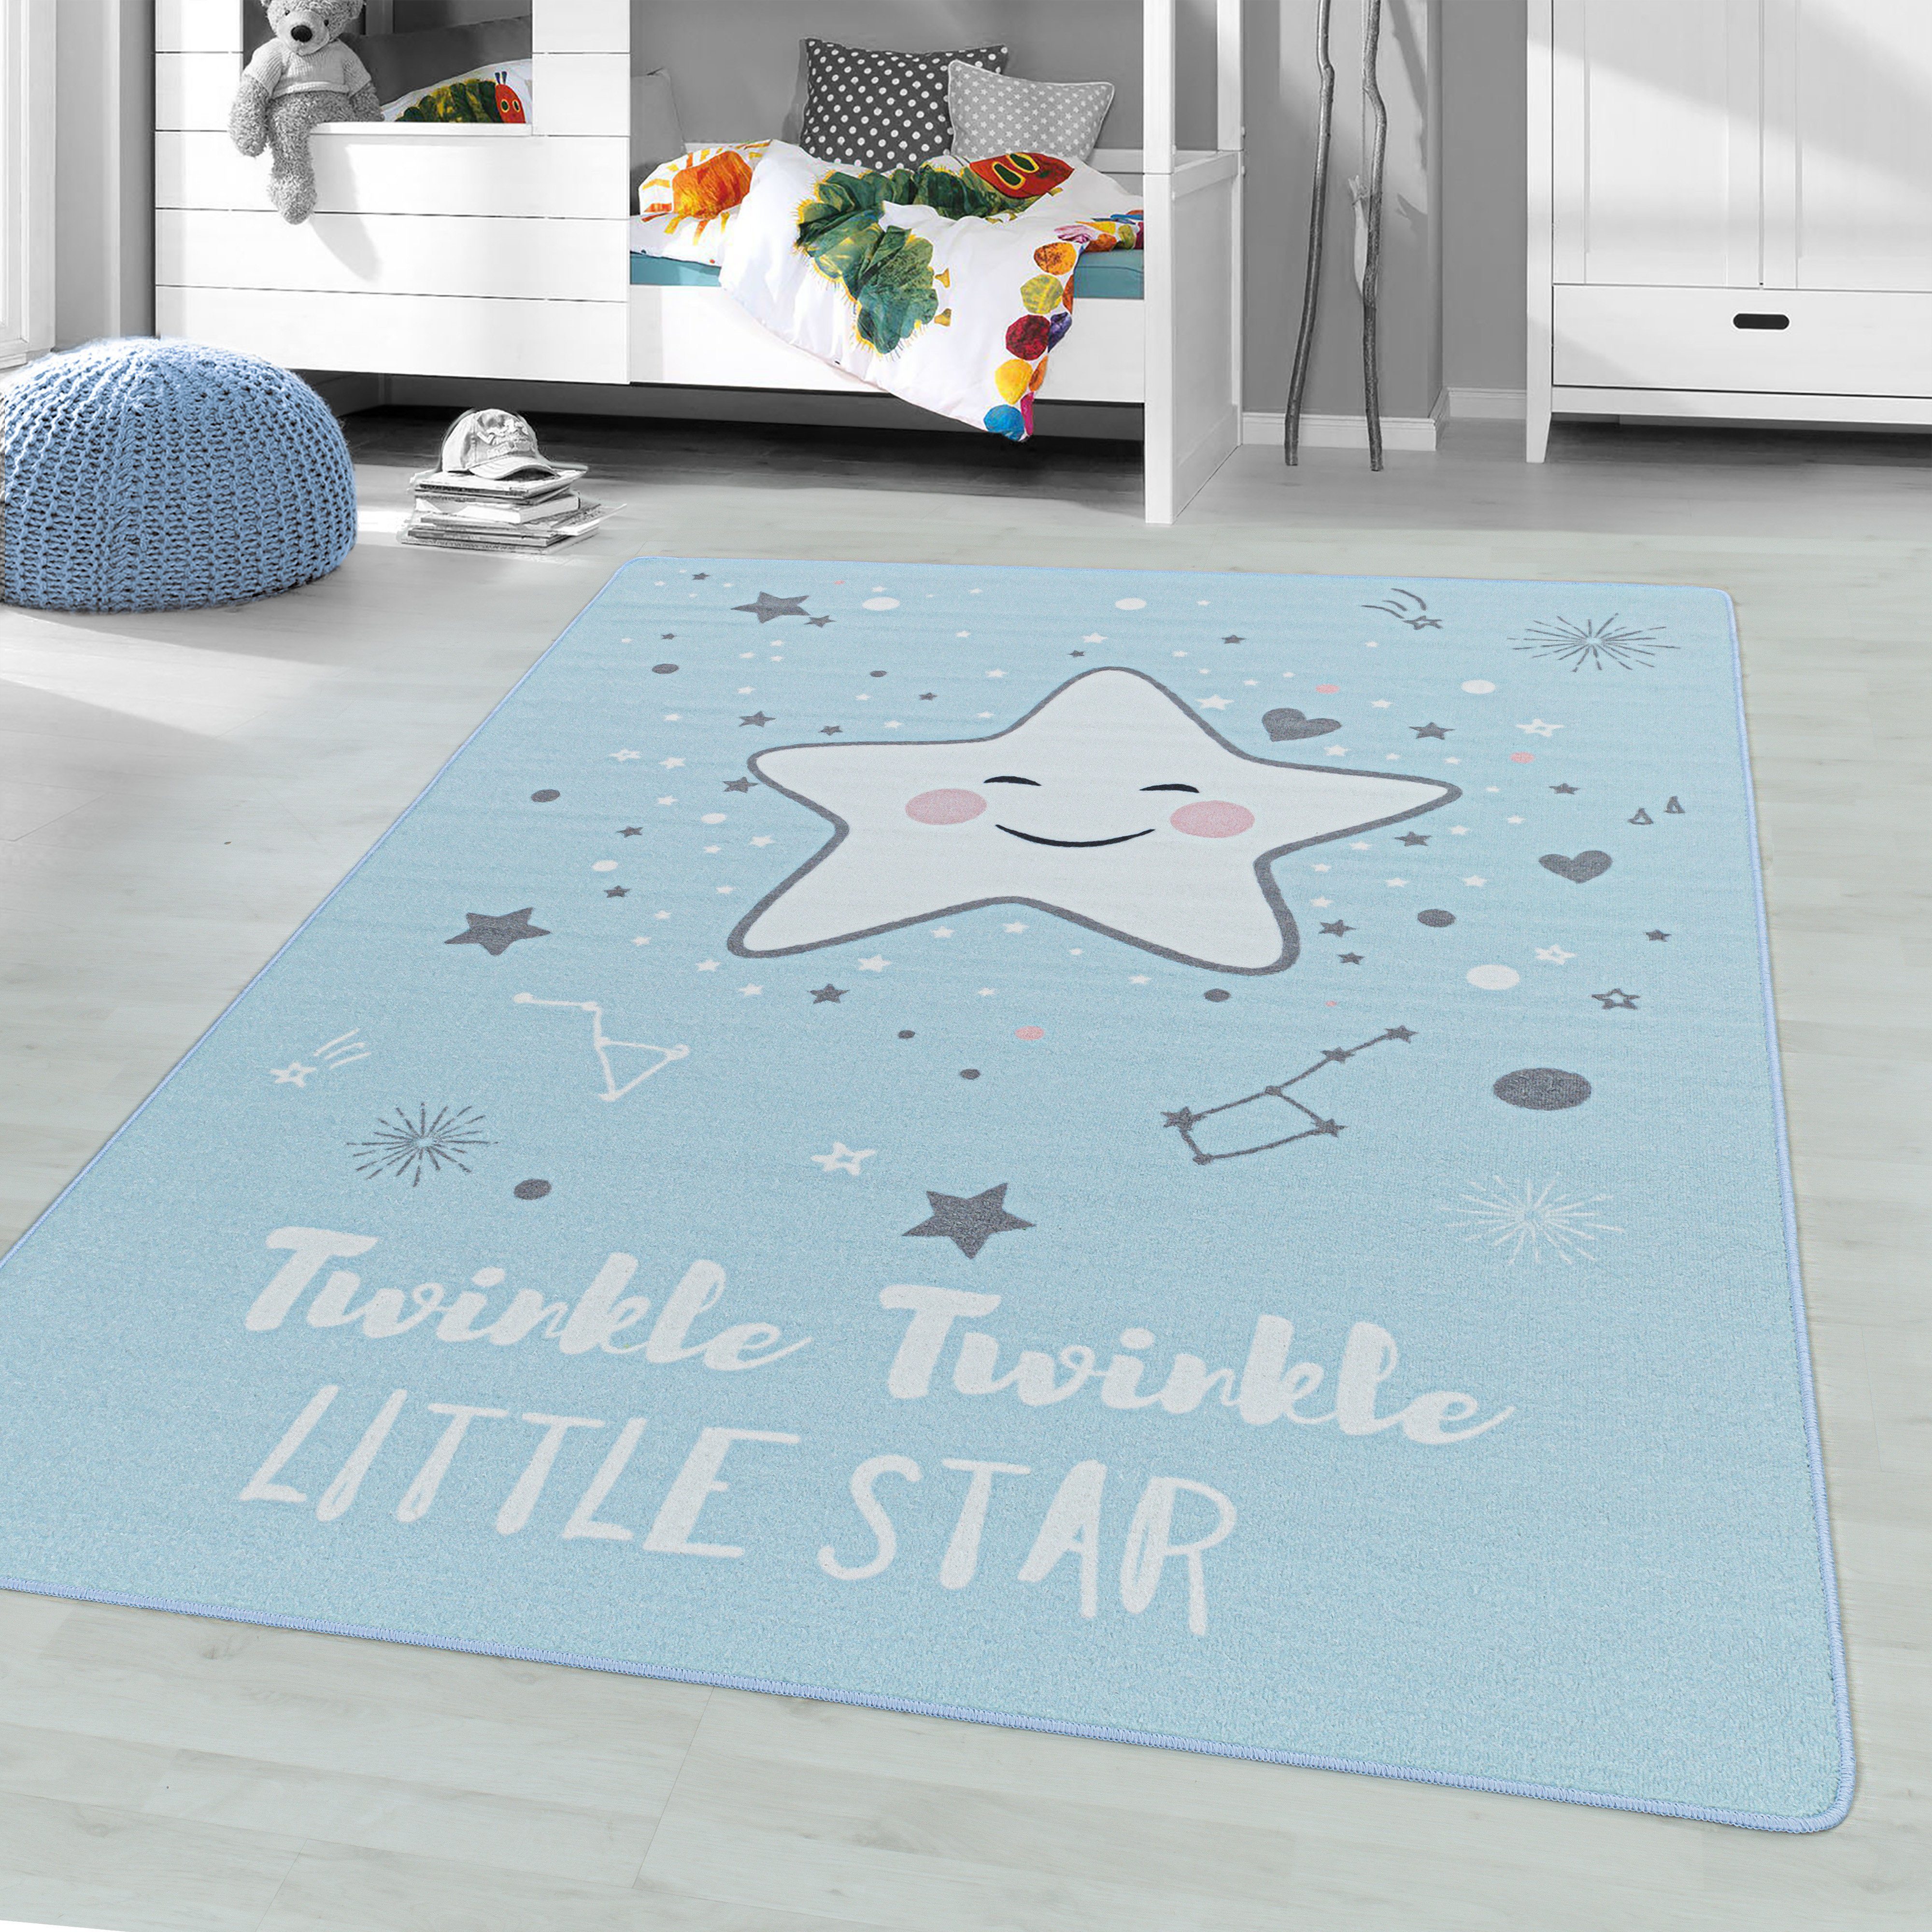 Kinderteppich Sterndeko Miovani Blau Kinderteppich Sternenteppich Kurzflorteppich, Kinderzimmer